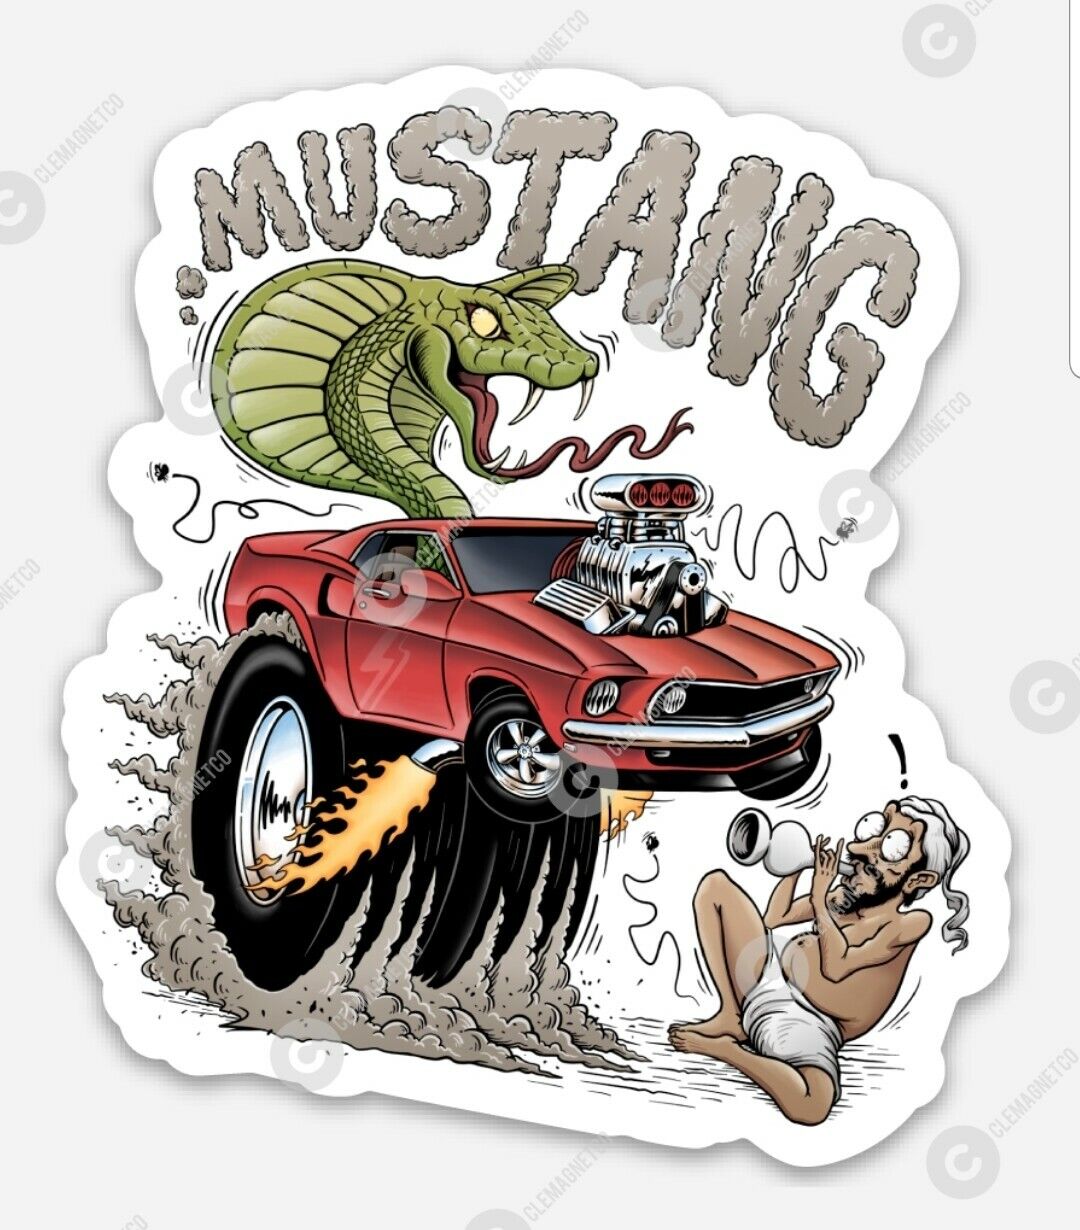 Mustang Cobra Rat Fink MAGNET - Ratfink Muscle car classic Auto Stang 